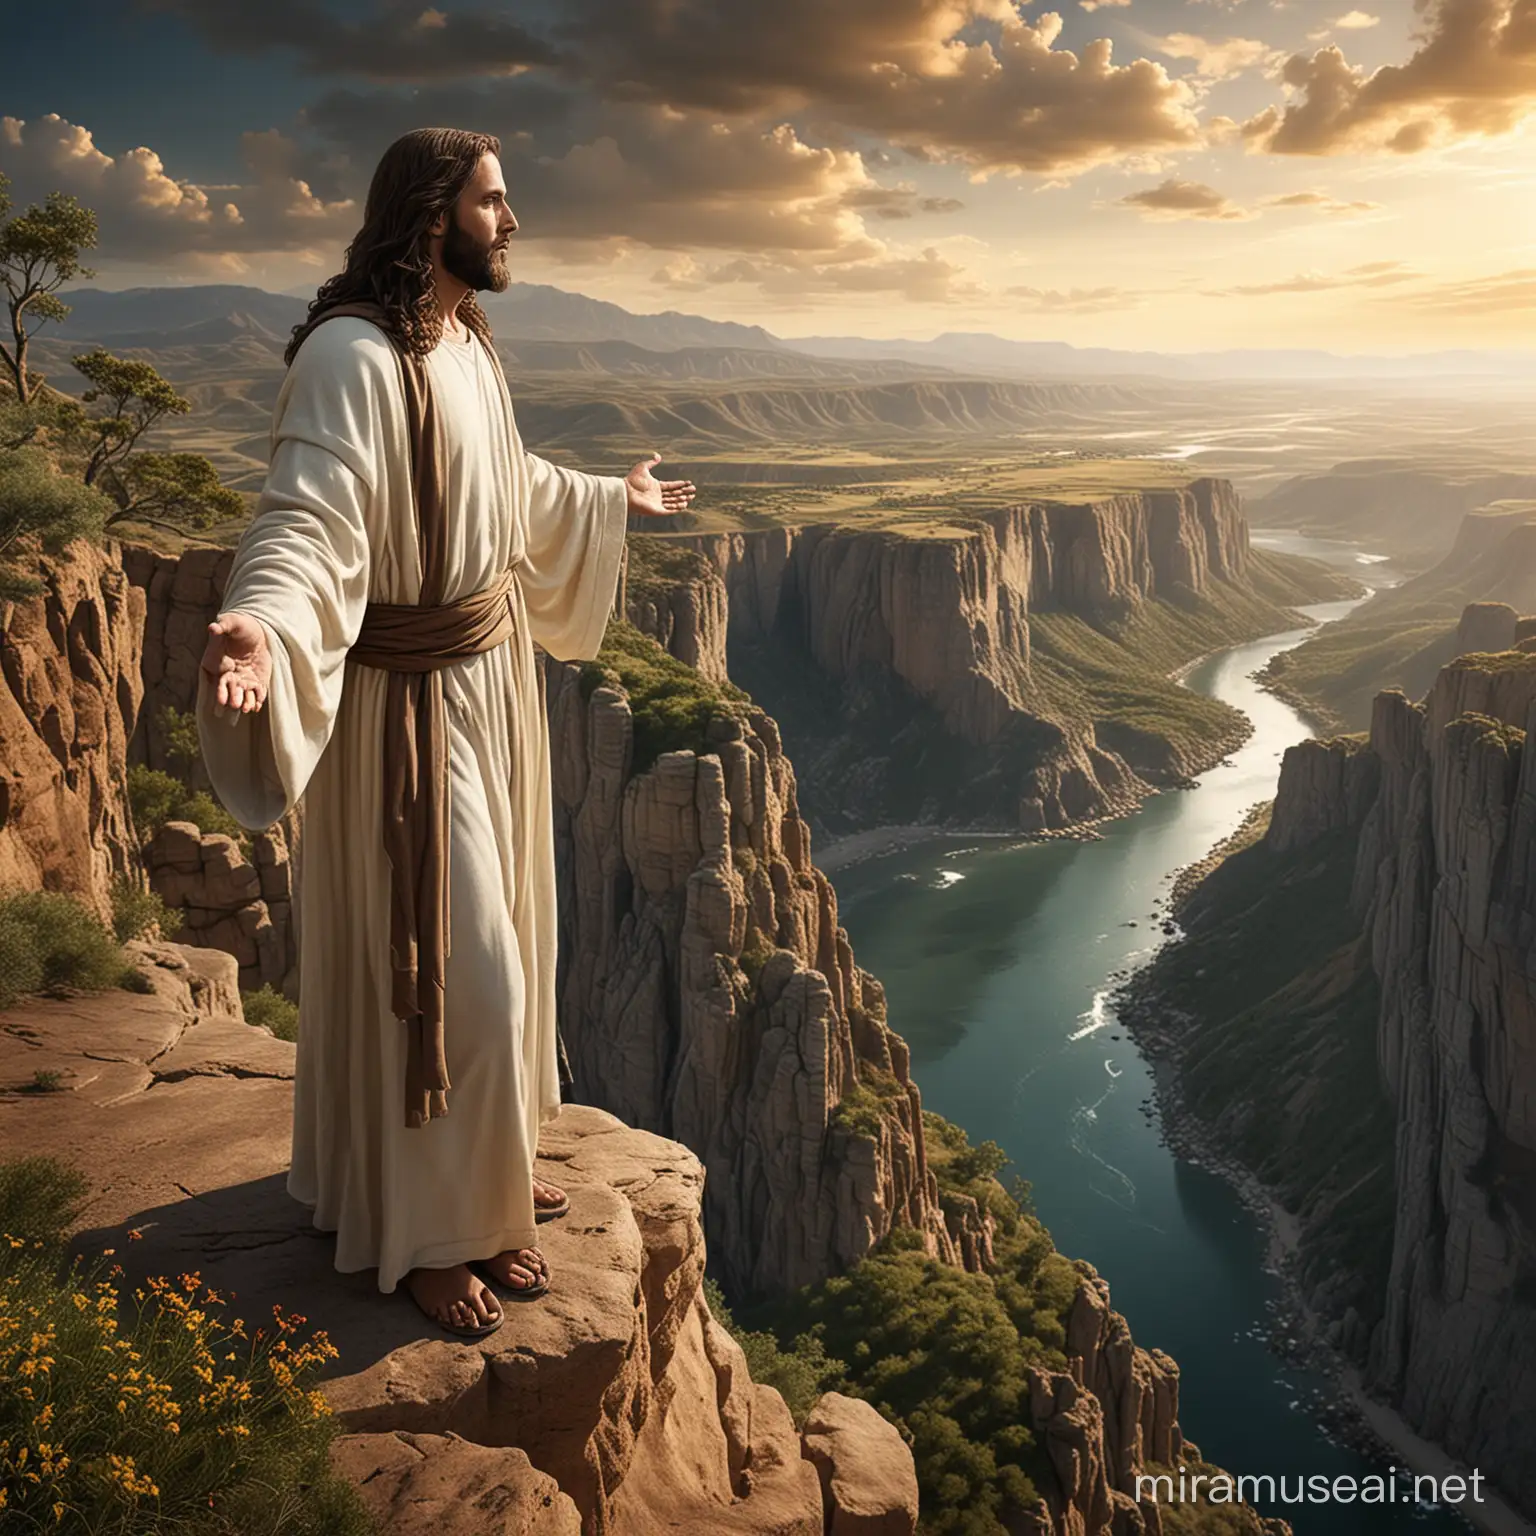 Majestic Jesus Statue Overlooking Stunning Cliff Landscape